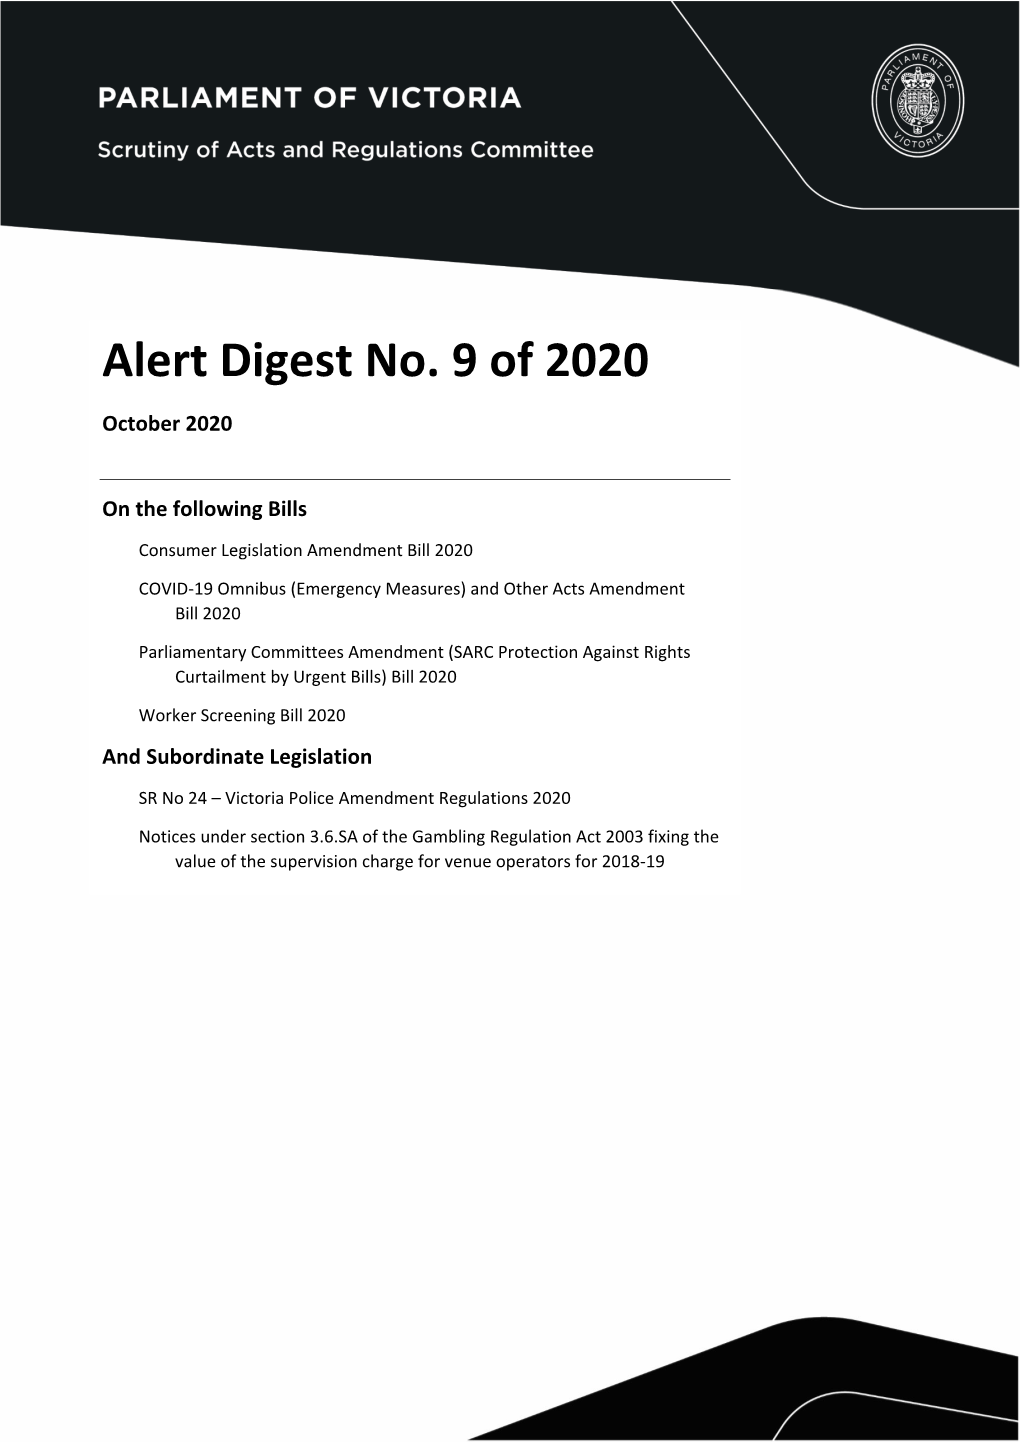 Alert Digest No. 9 of 2020